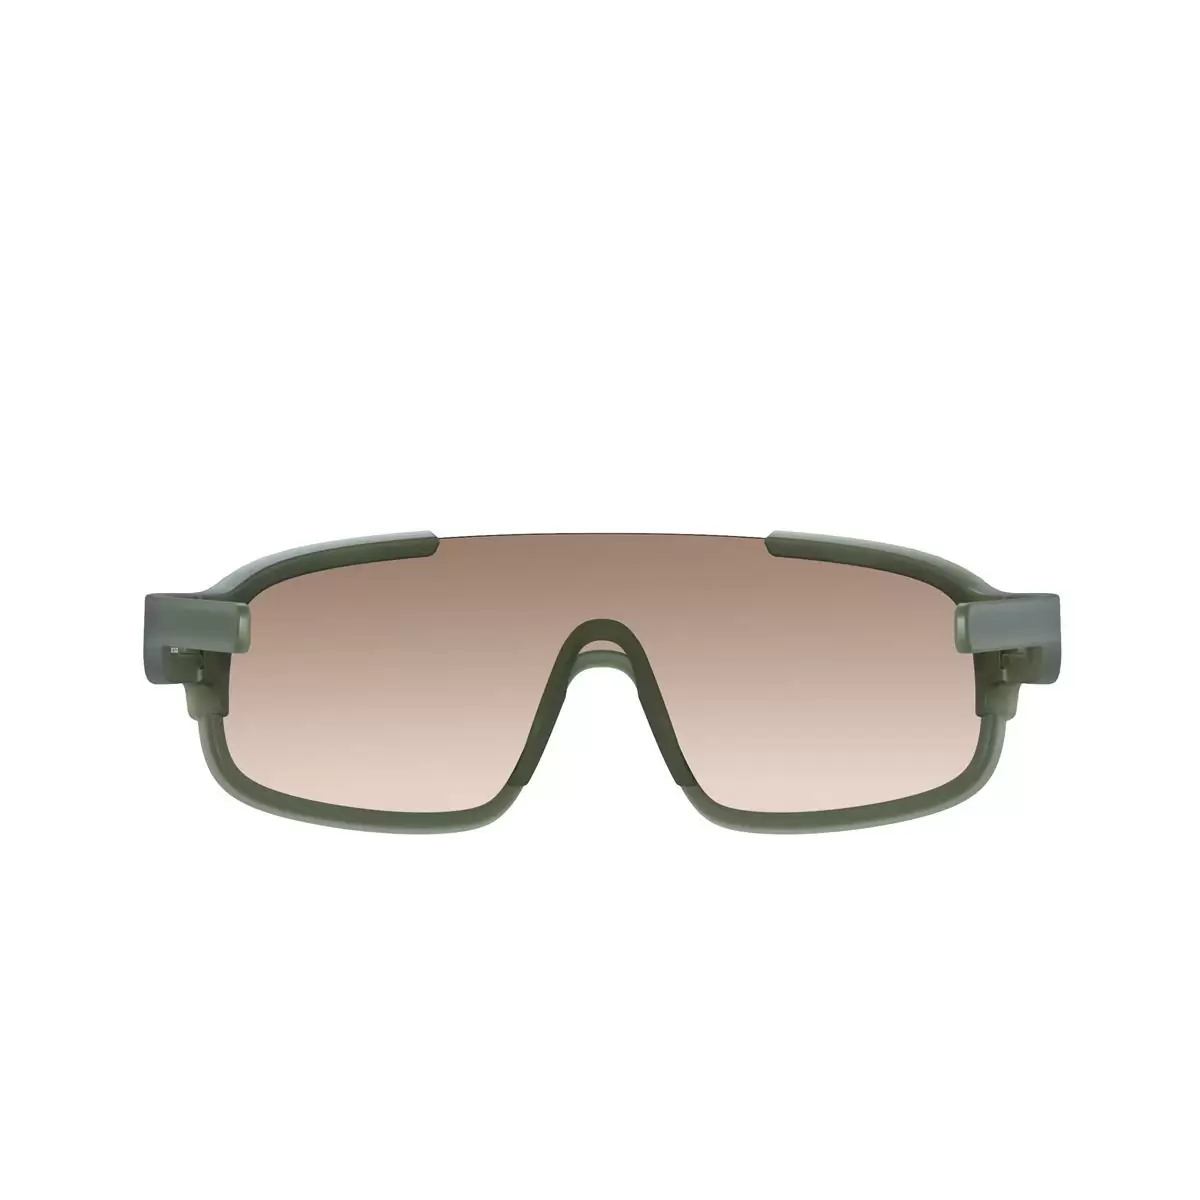 Crave Sunglasses Epidote Green Brown/Silver Mirror Lens #3